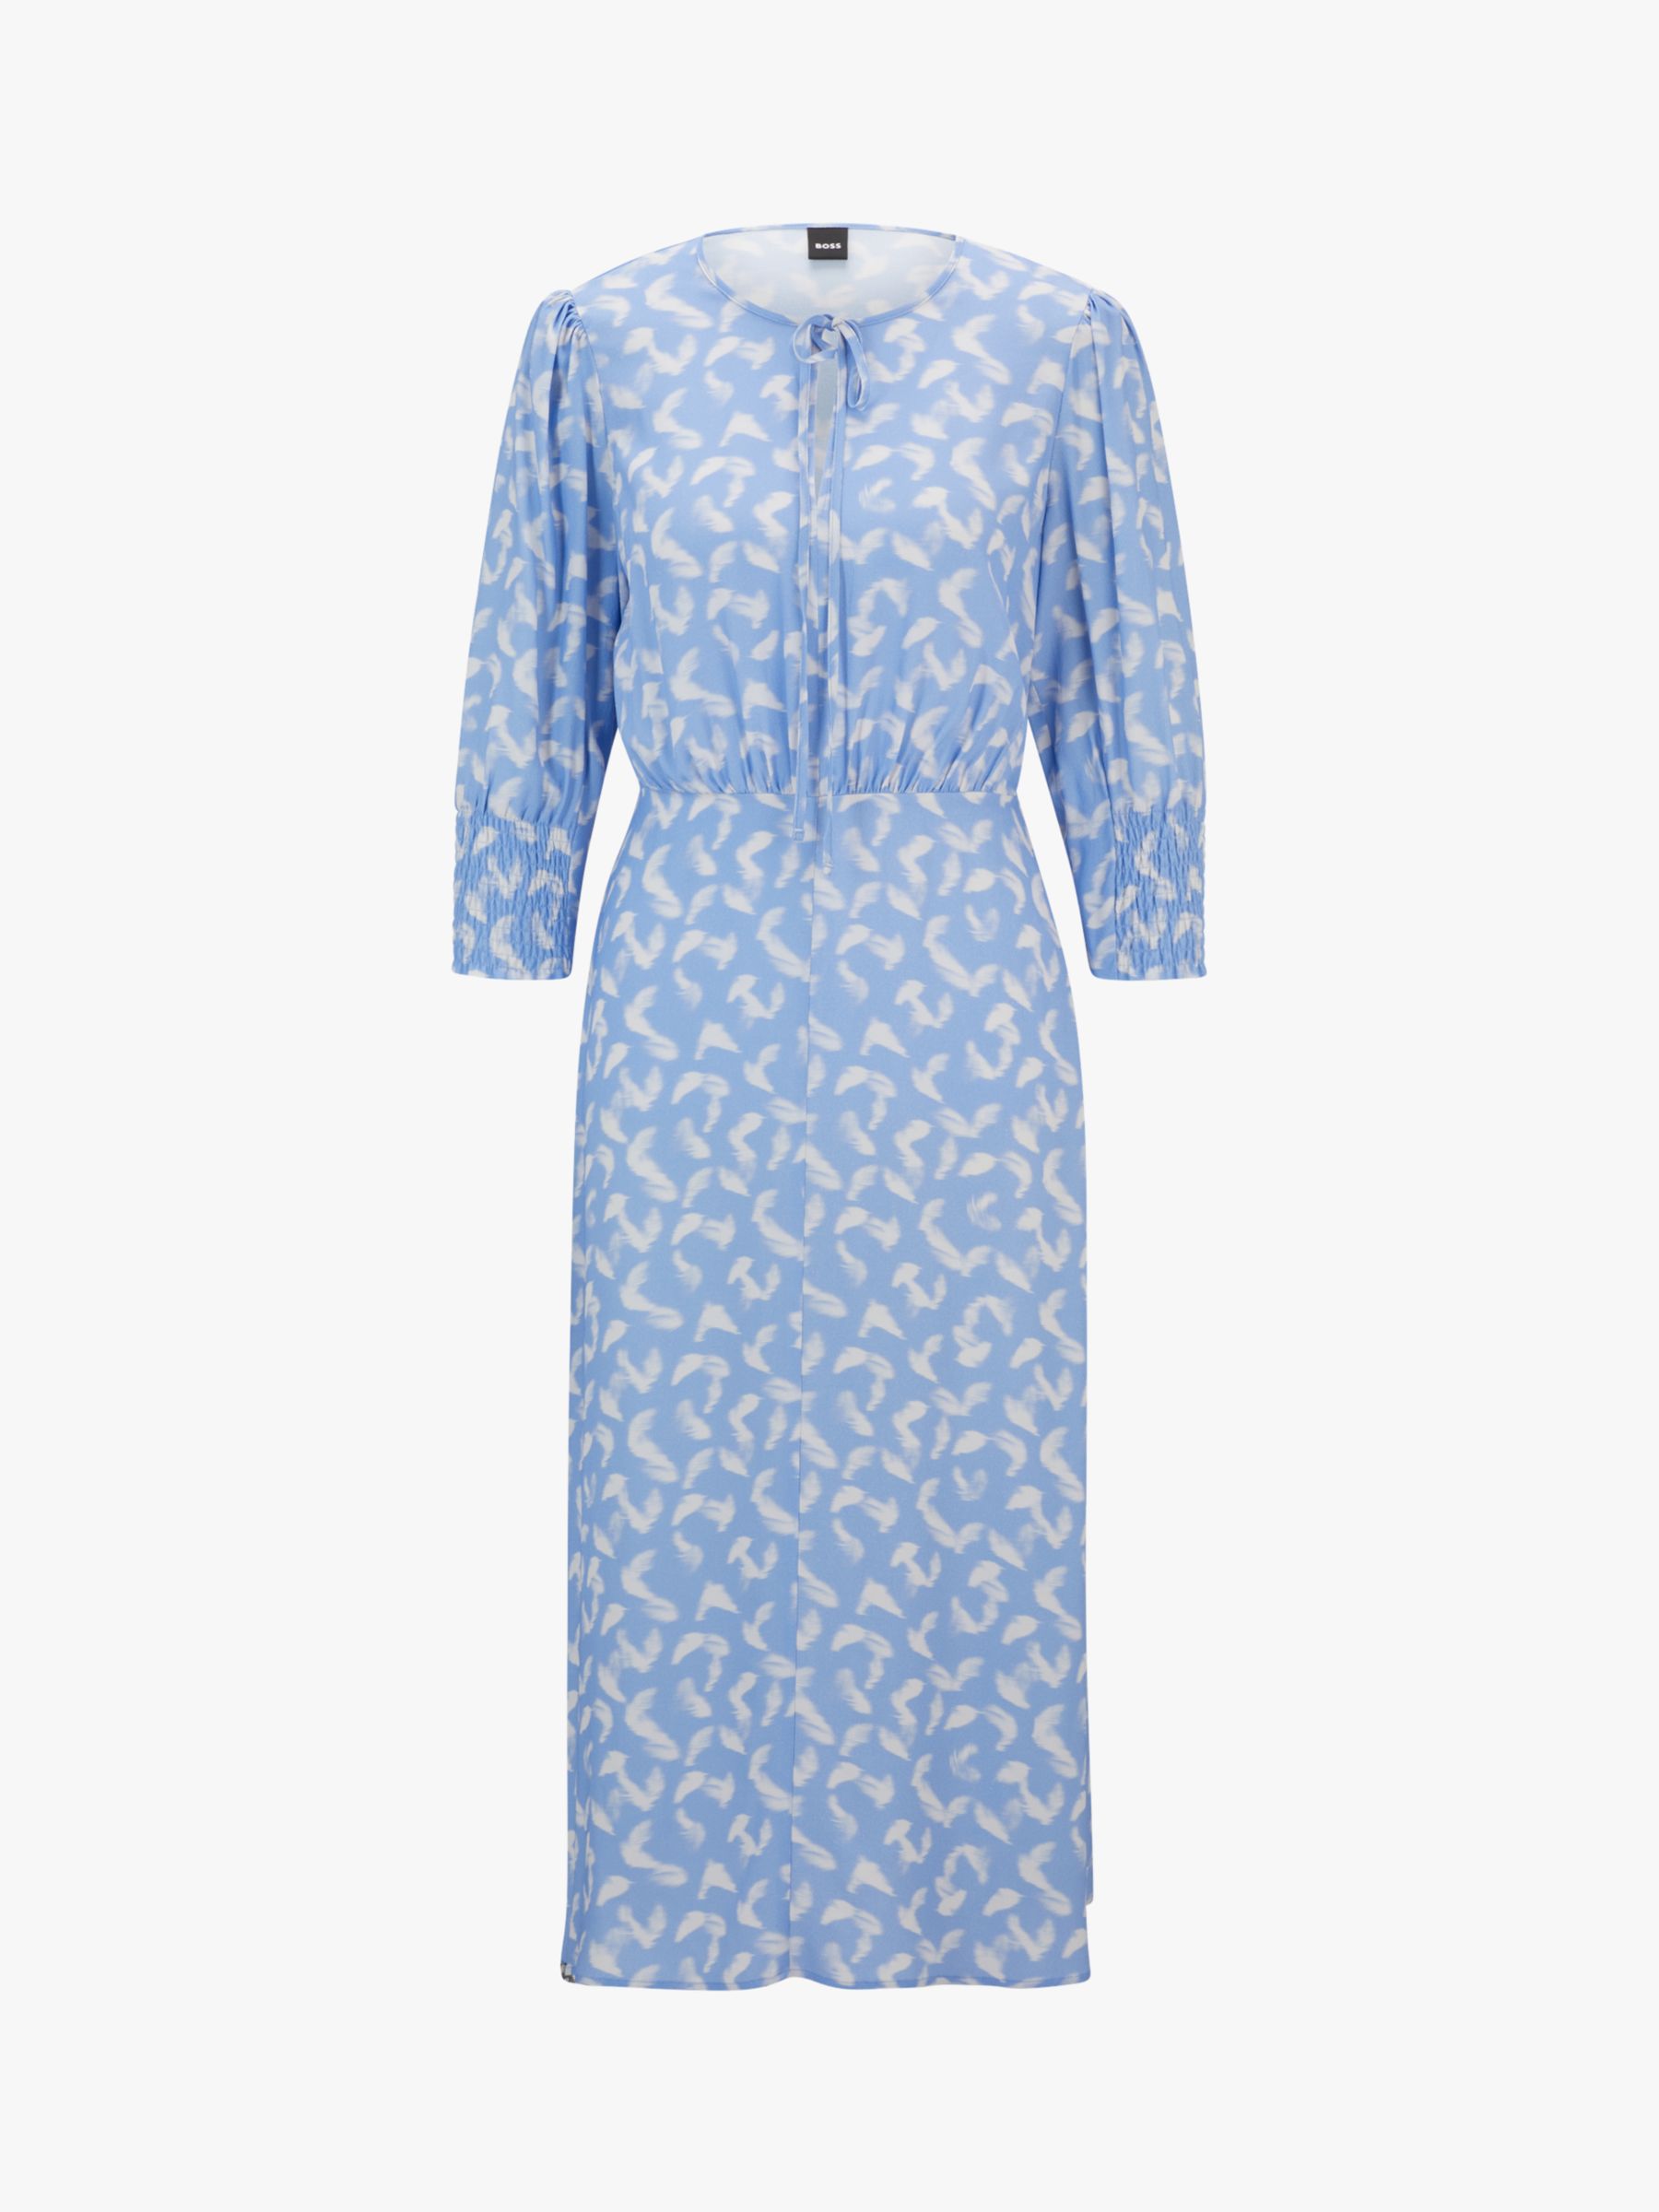 BOSS Daflori Abstract Print Midi A-Line Dress, Blue/White, 12